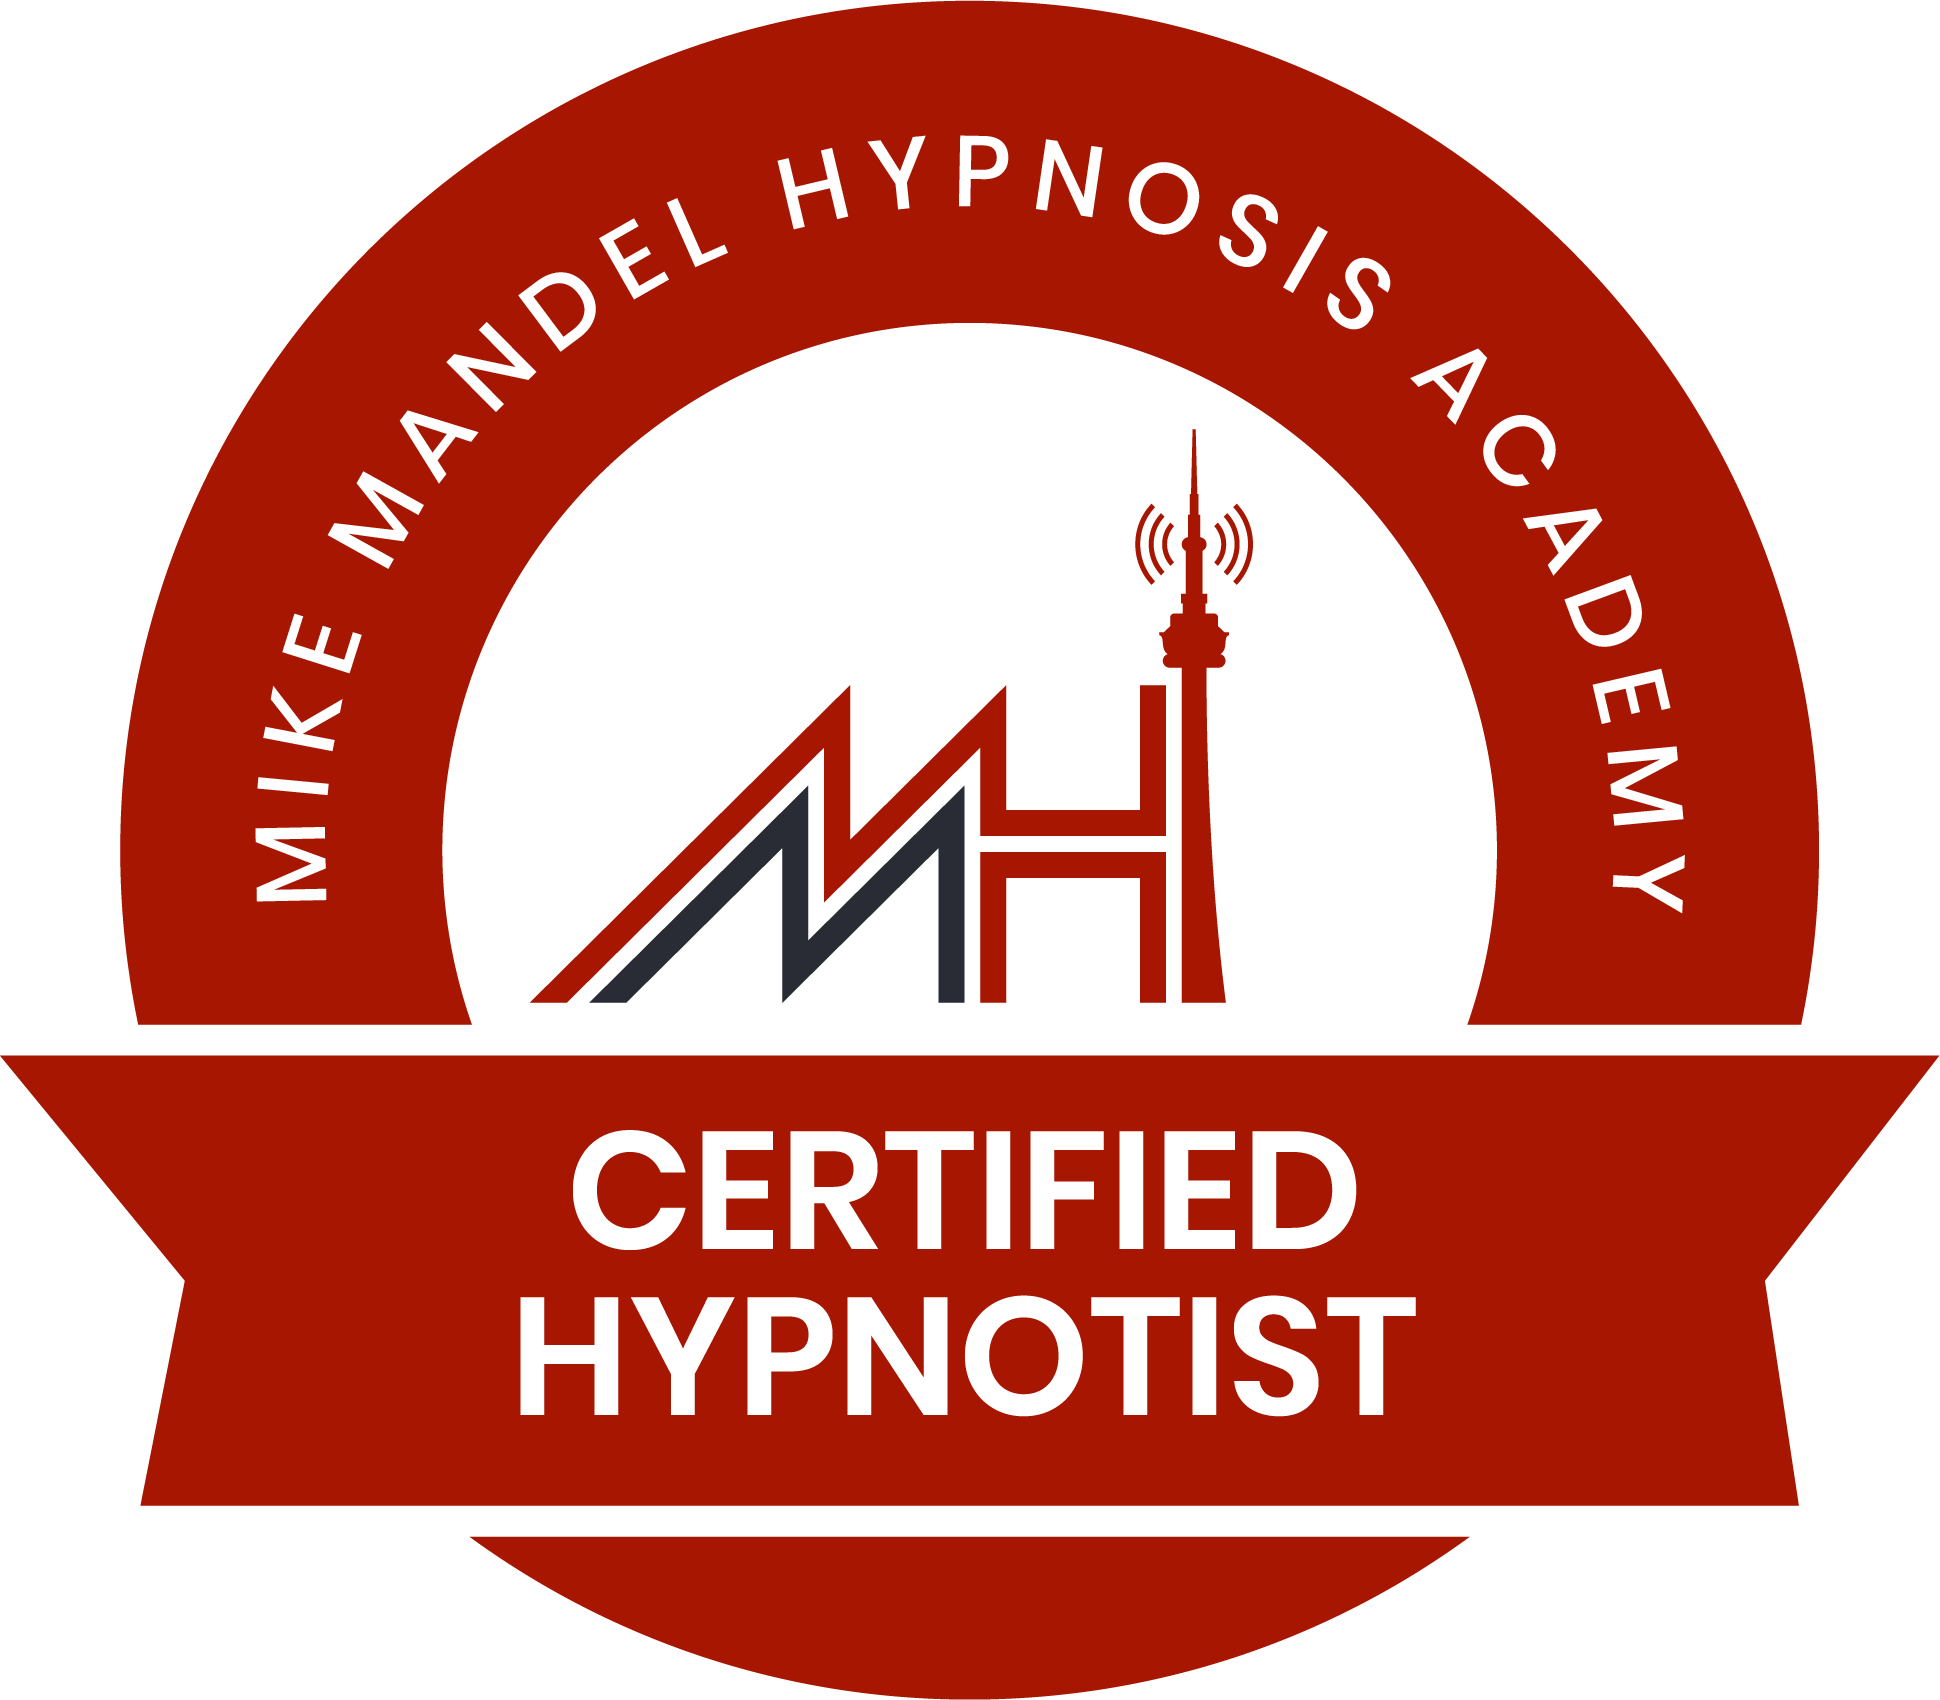 Certified by Mike Mandel